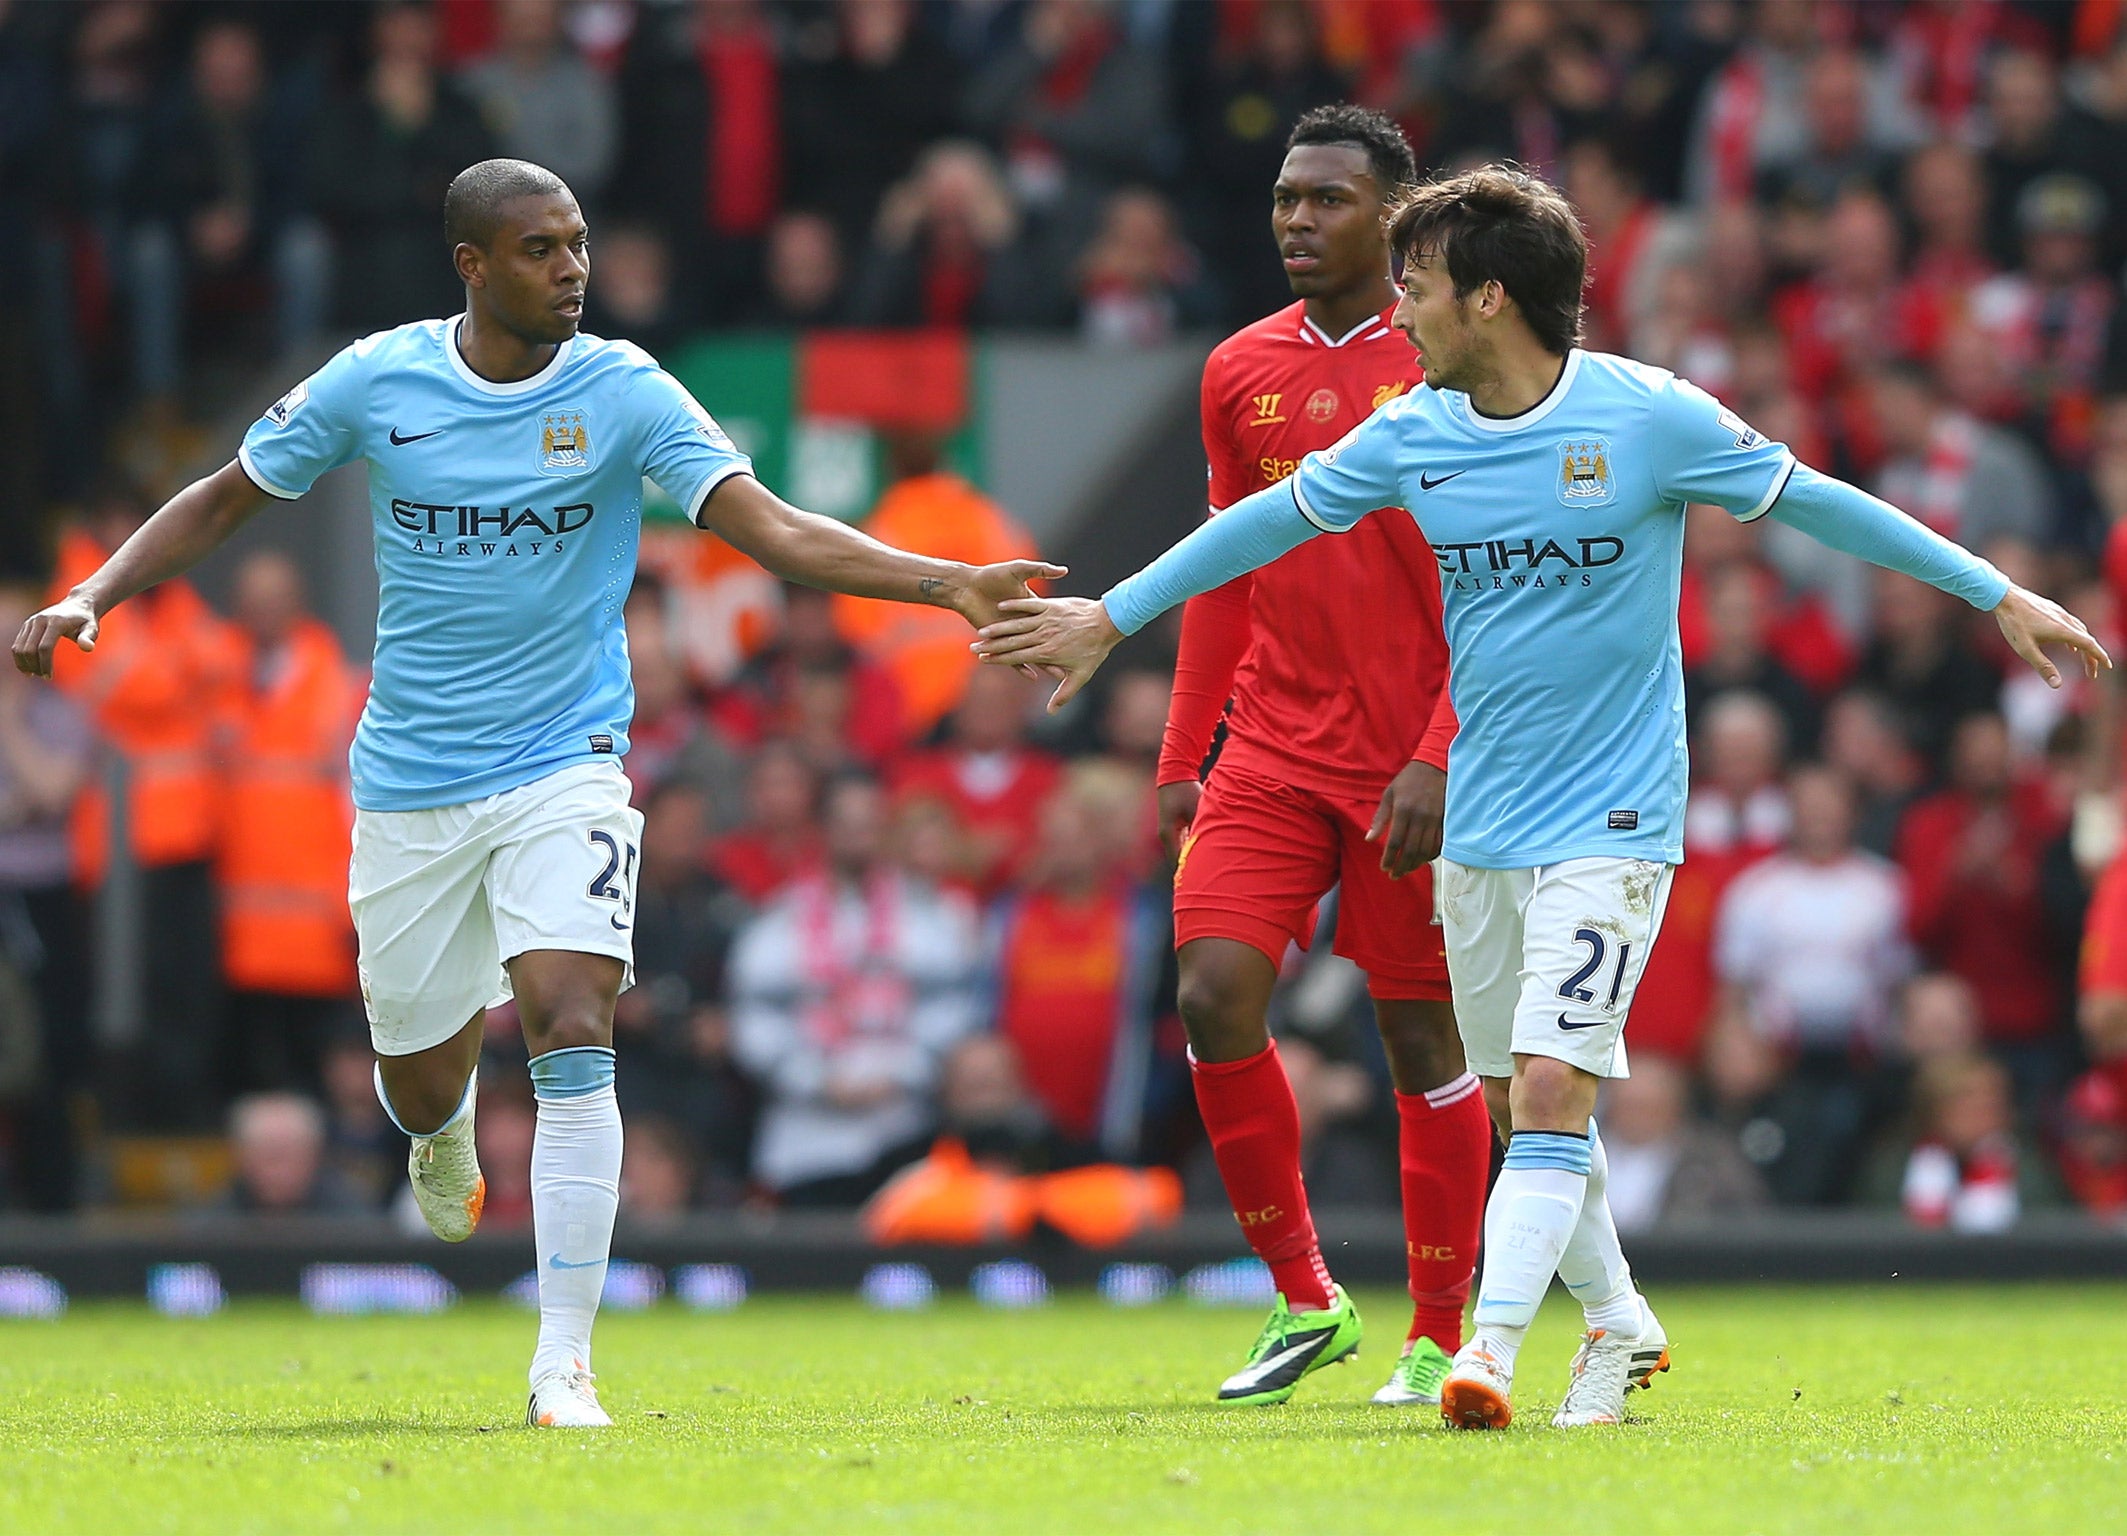 Fernandinho and David Silva celebrate following a Manchester City goal against Liverpool last weekend